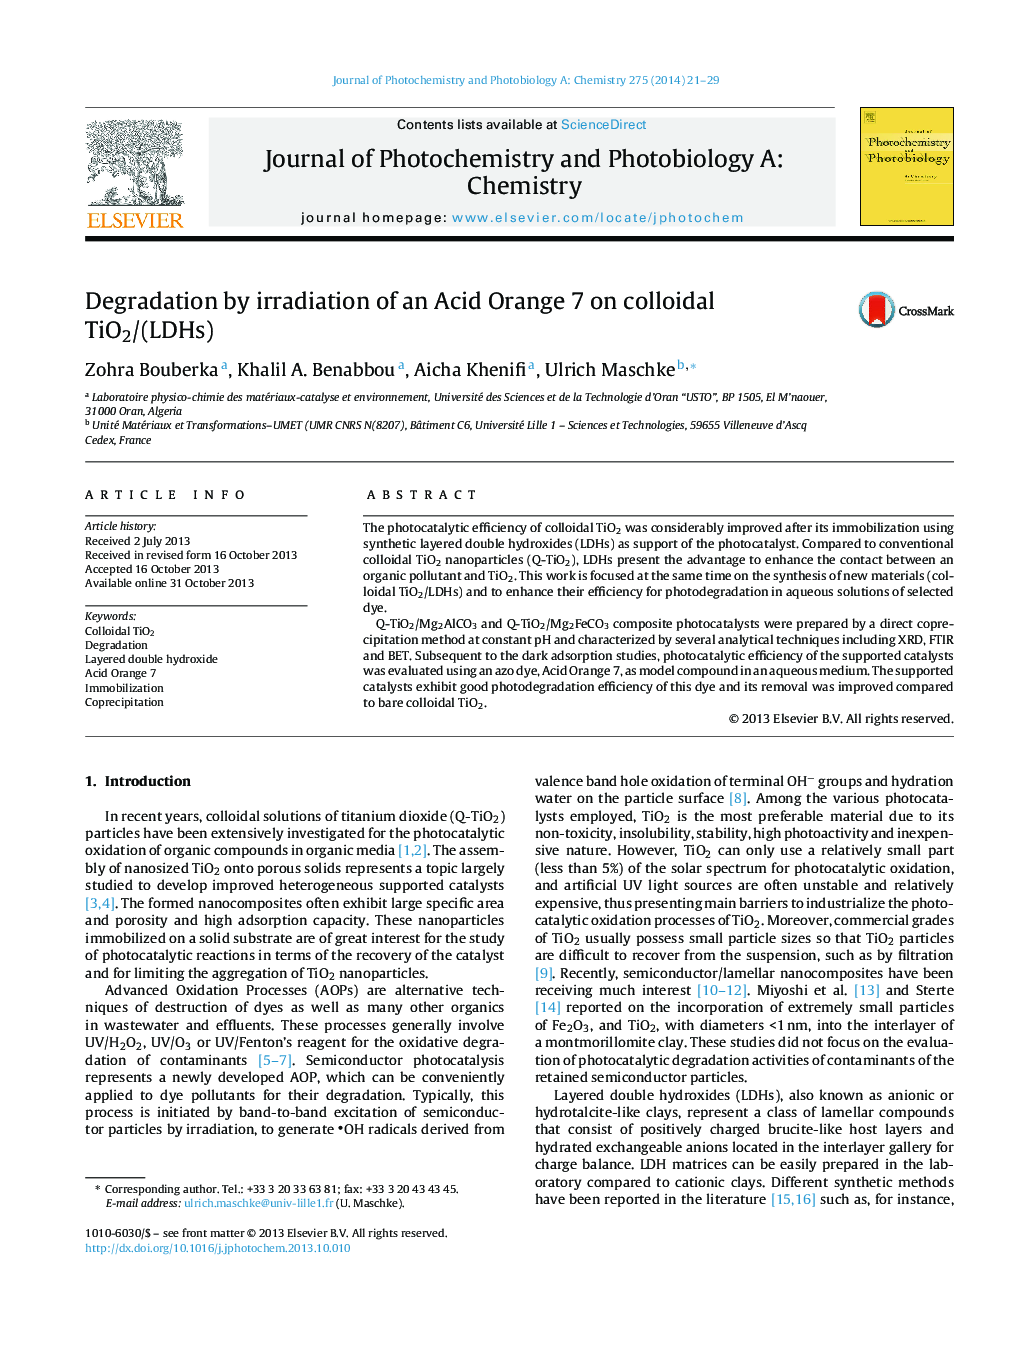 Degradation by irradiation of an Acid Orange 7 on colloidal TiO2/(LDHs)